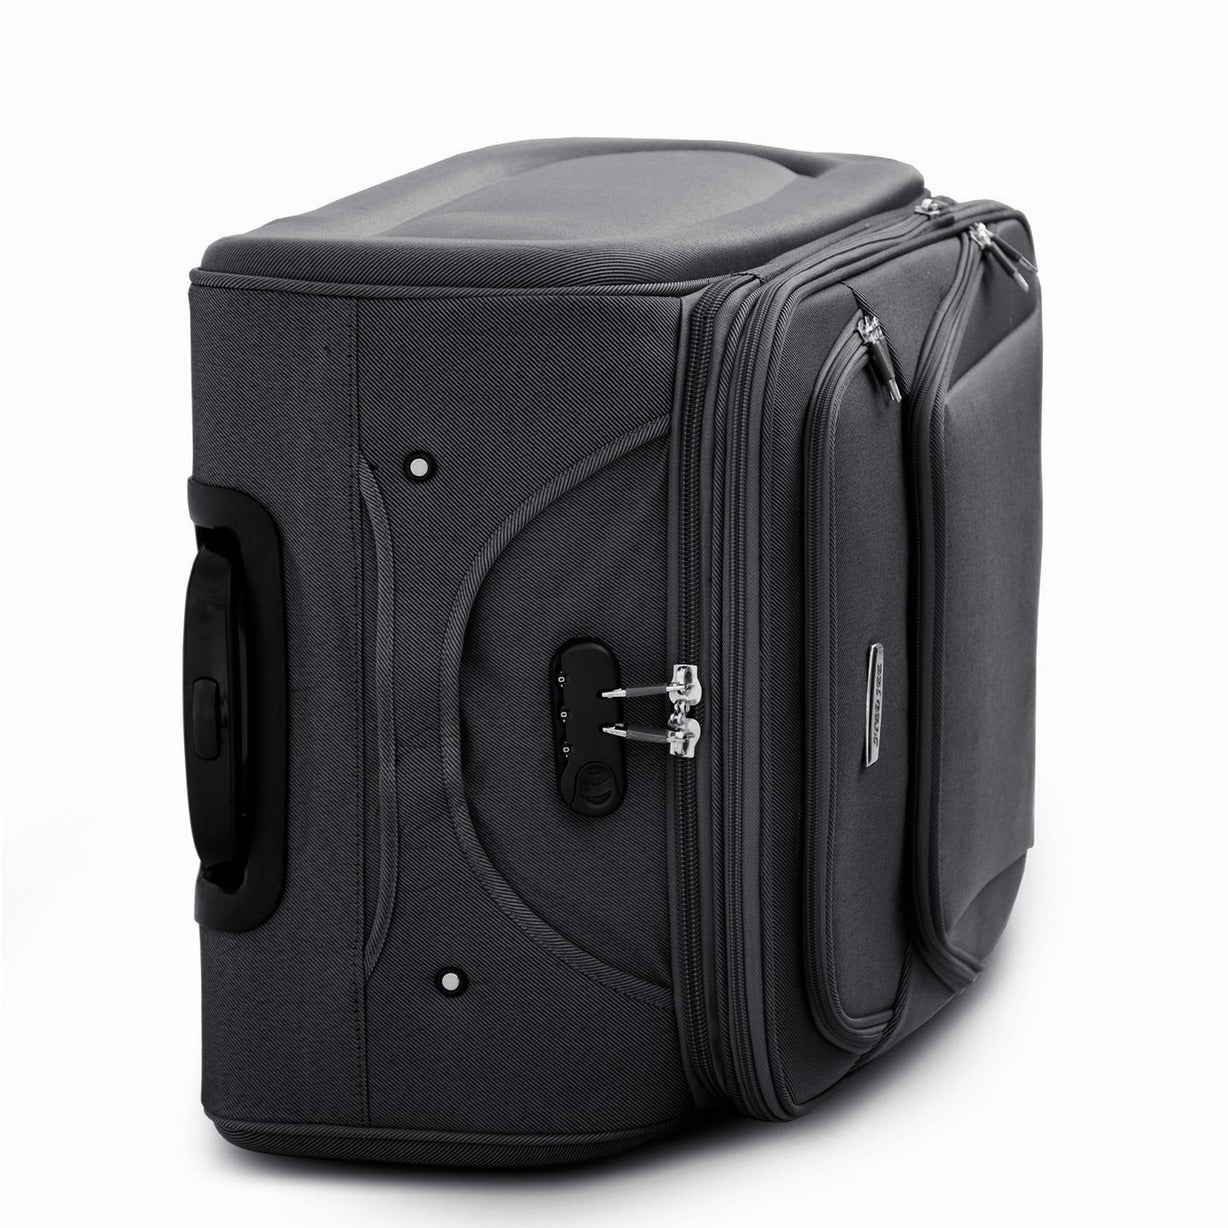 20" Black Colour SJ JIAN 4 Wheel Luggage Lightweight Soft Material Carry On Trolley Bag